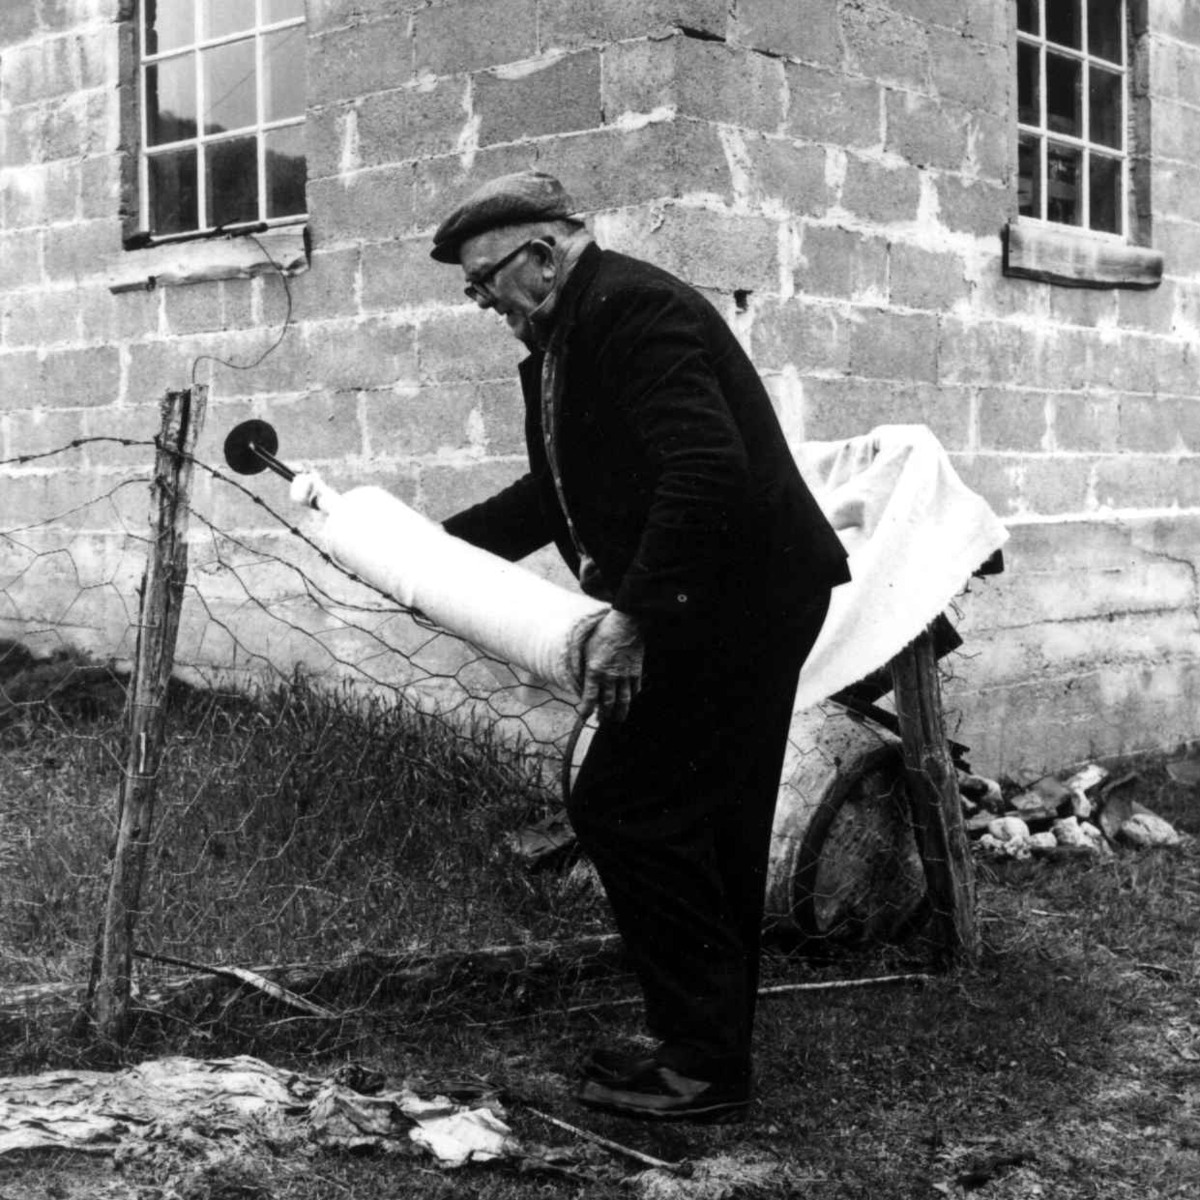 Stamping av vadmel. Ingemund Kvæstad ruller ut ferdig stampet vadmelstøy til tørk på gjerdet. Kvæstad, Suldal, Rogaland 1970.